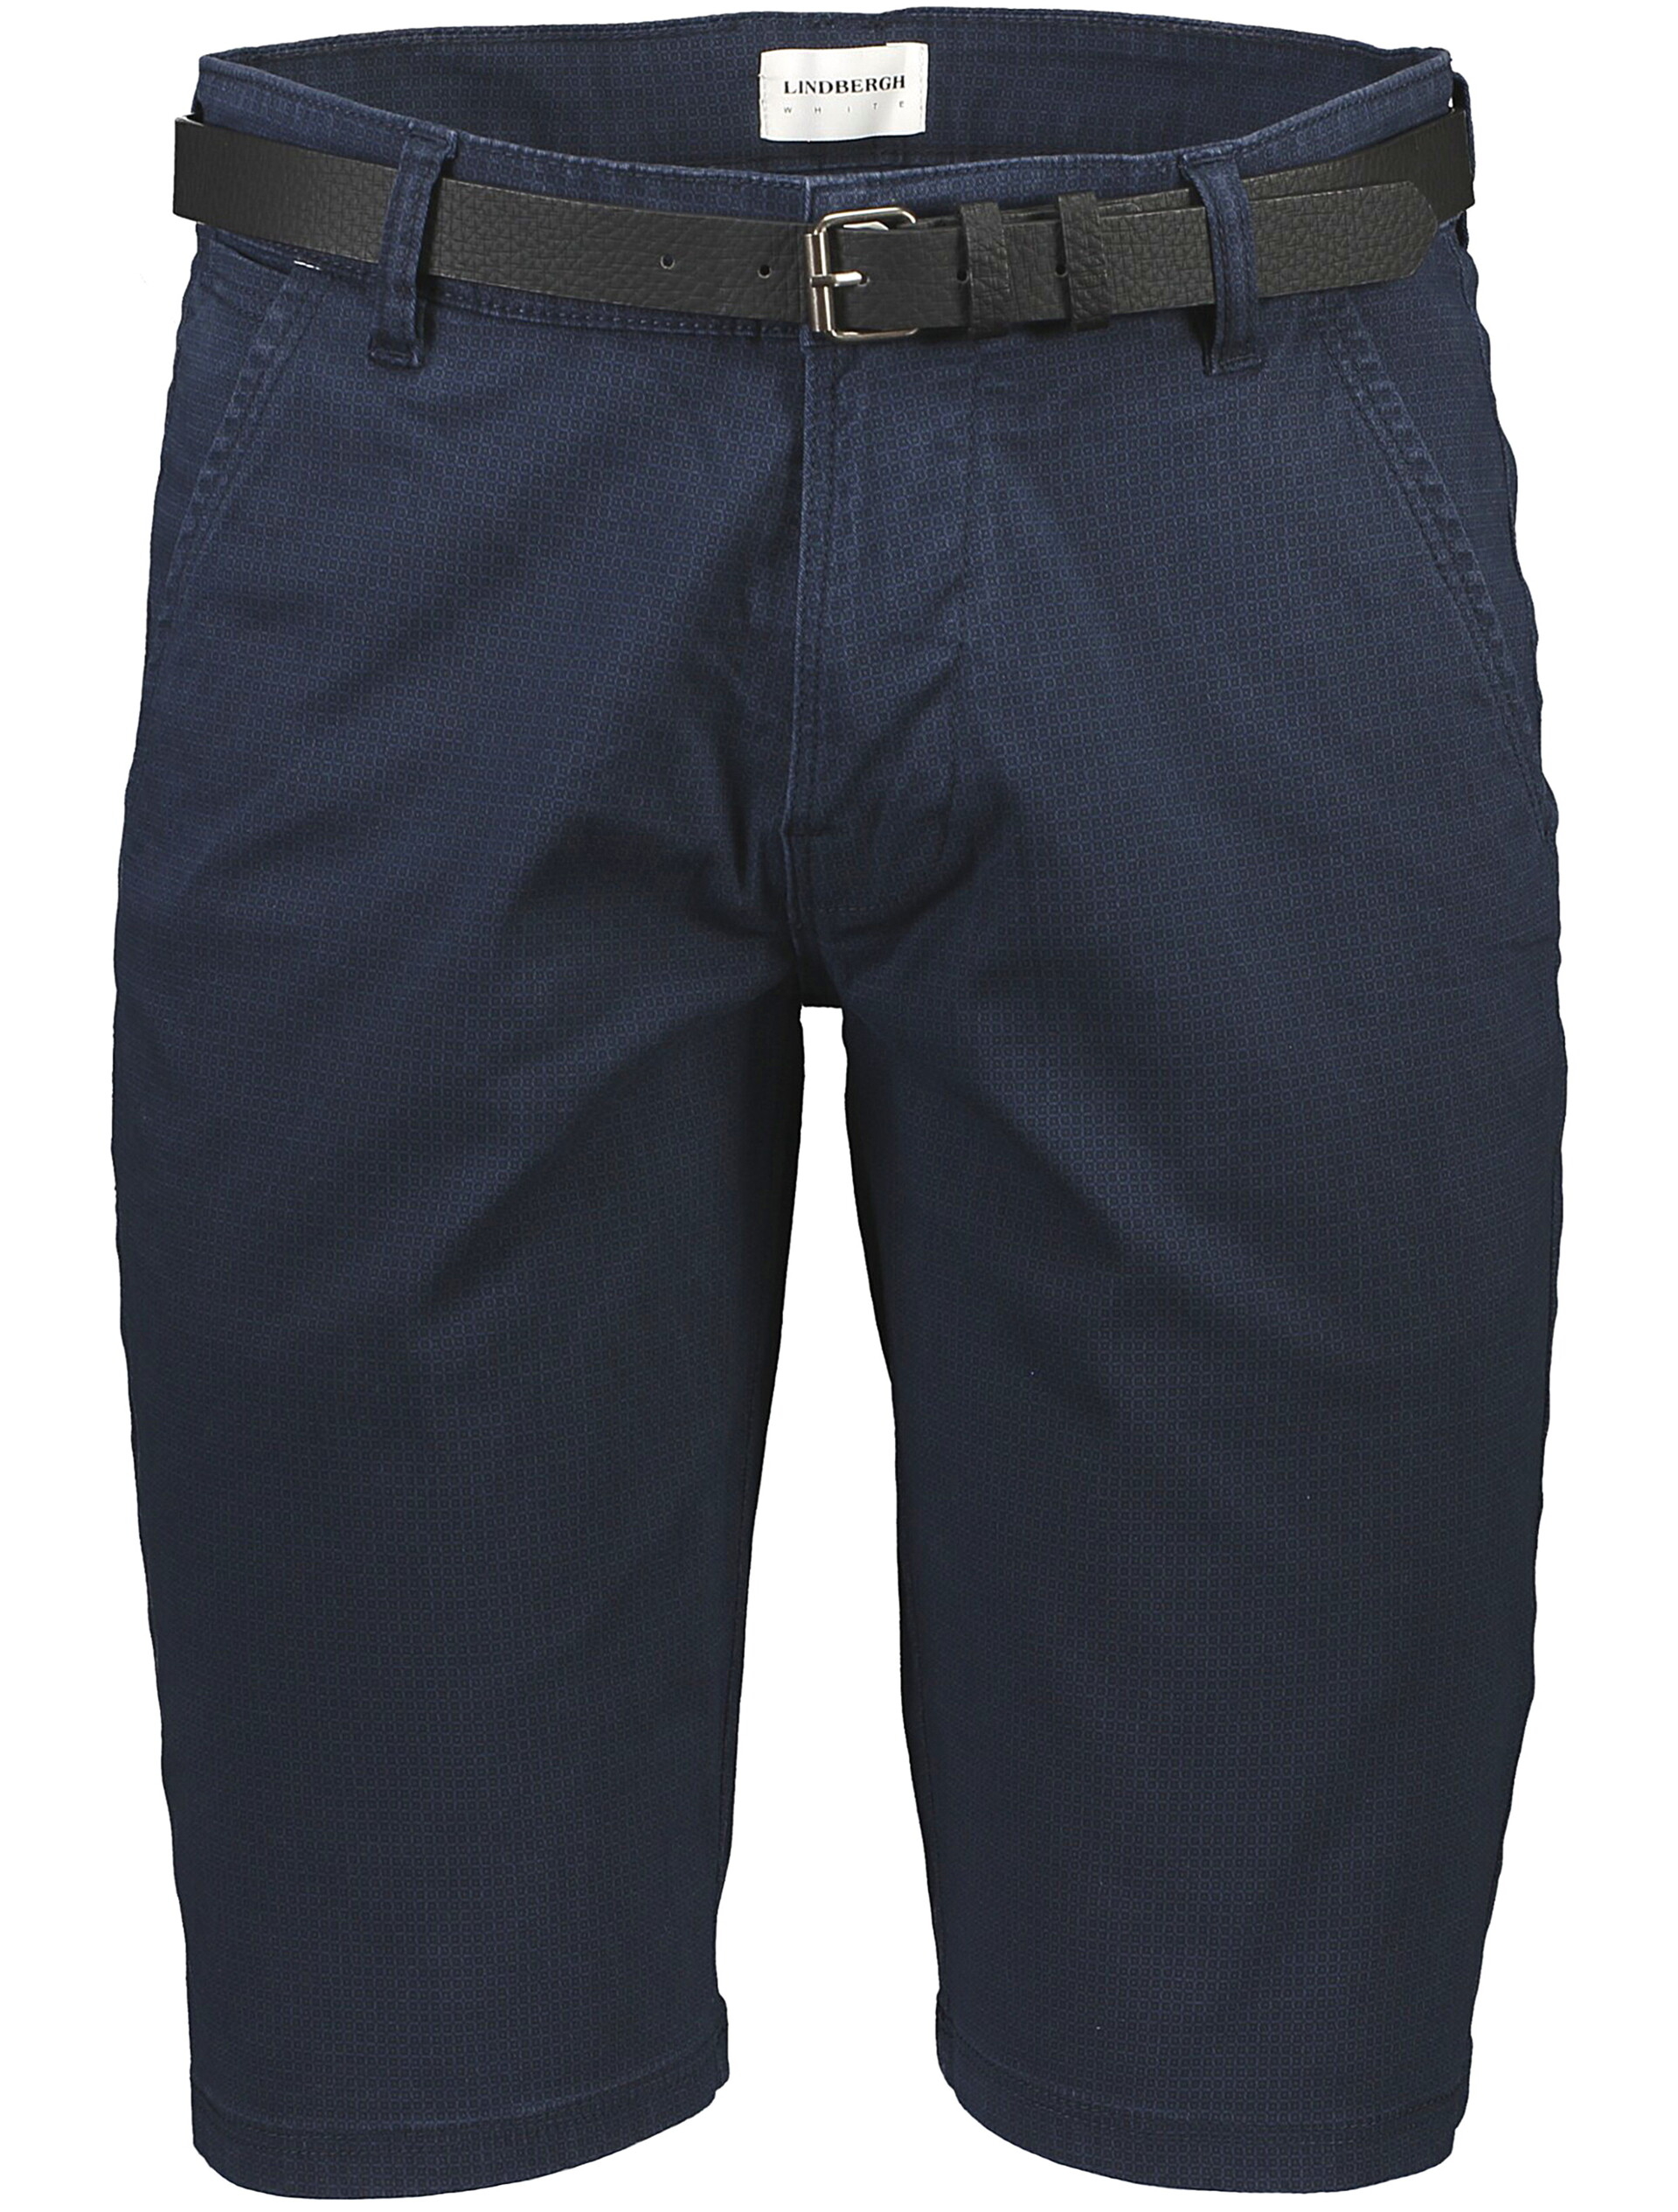 Lindbergh Chino shorts blue / navy